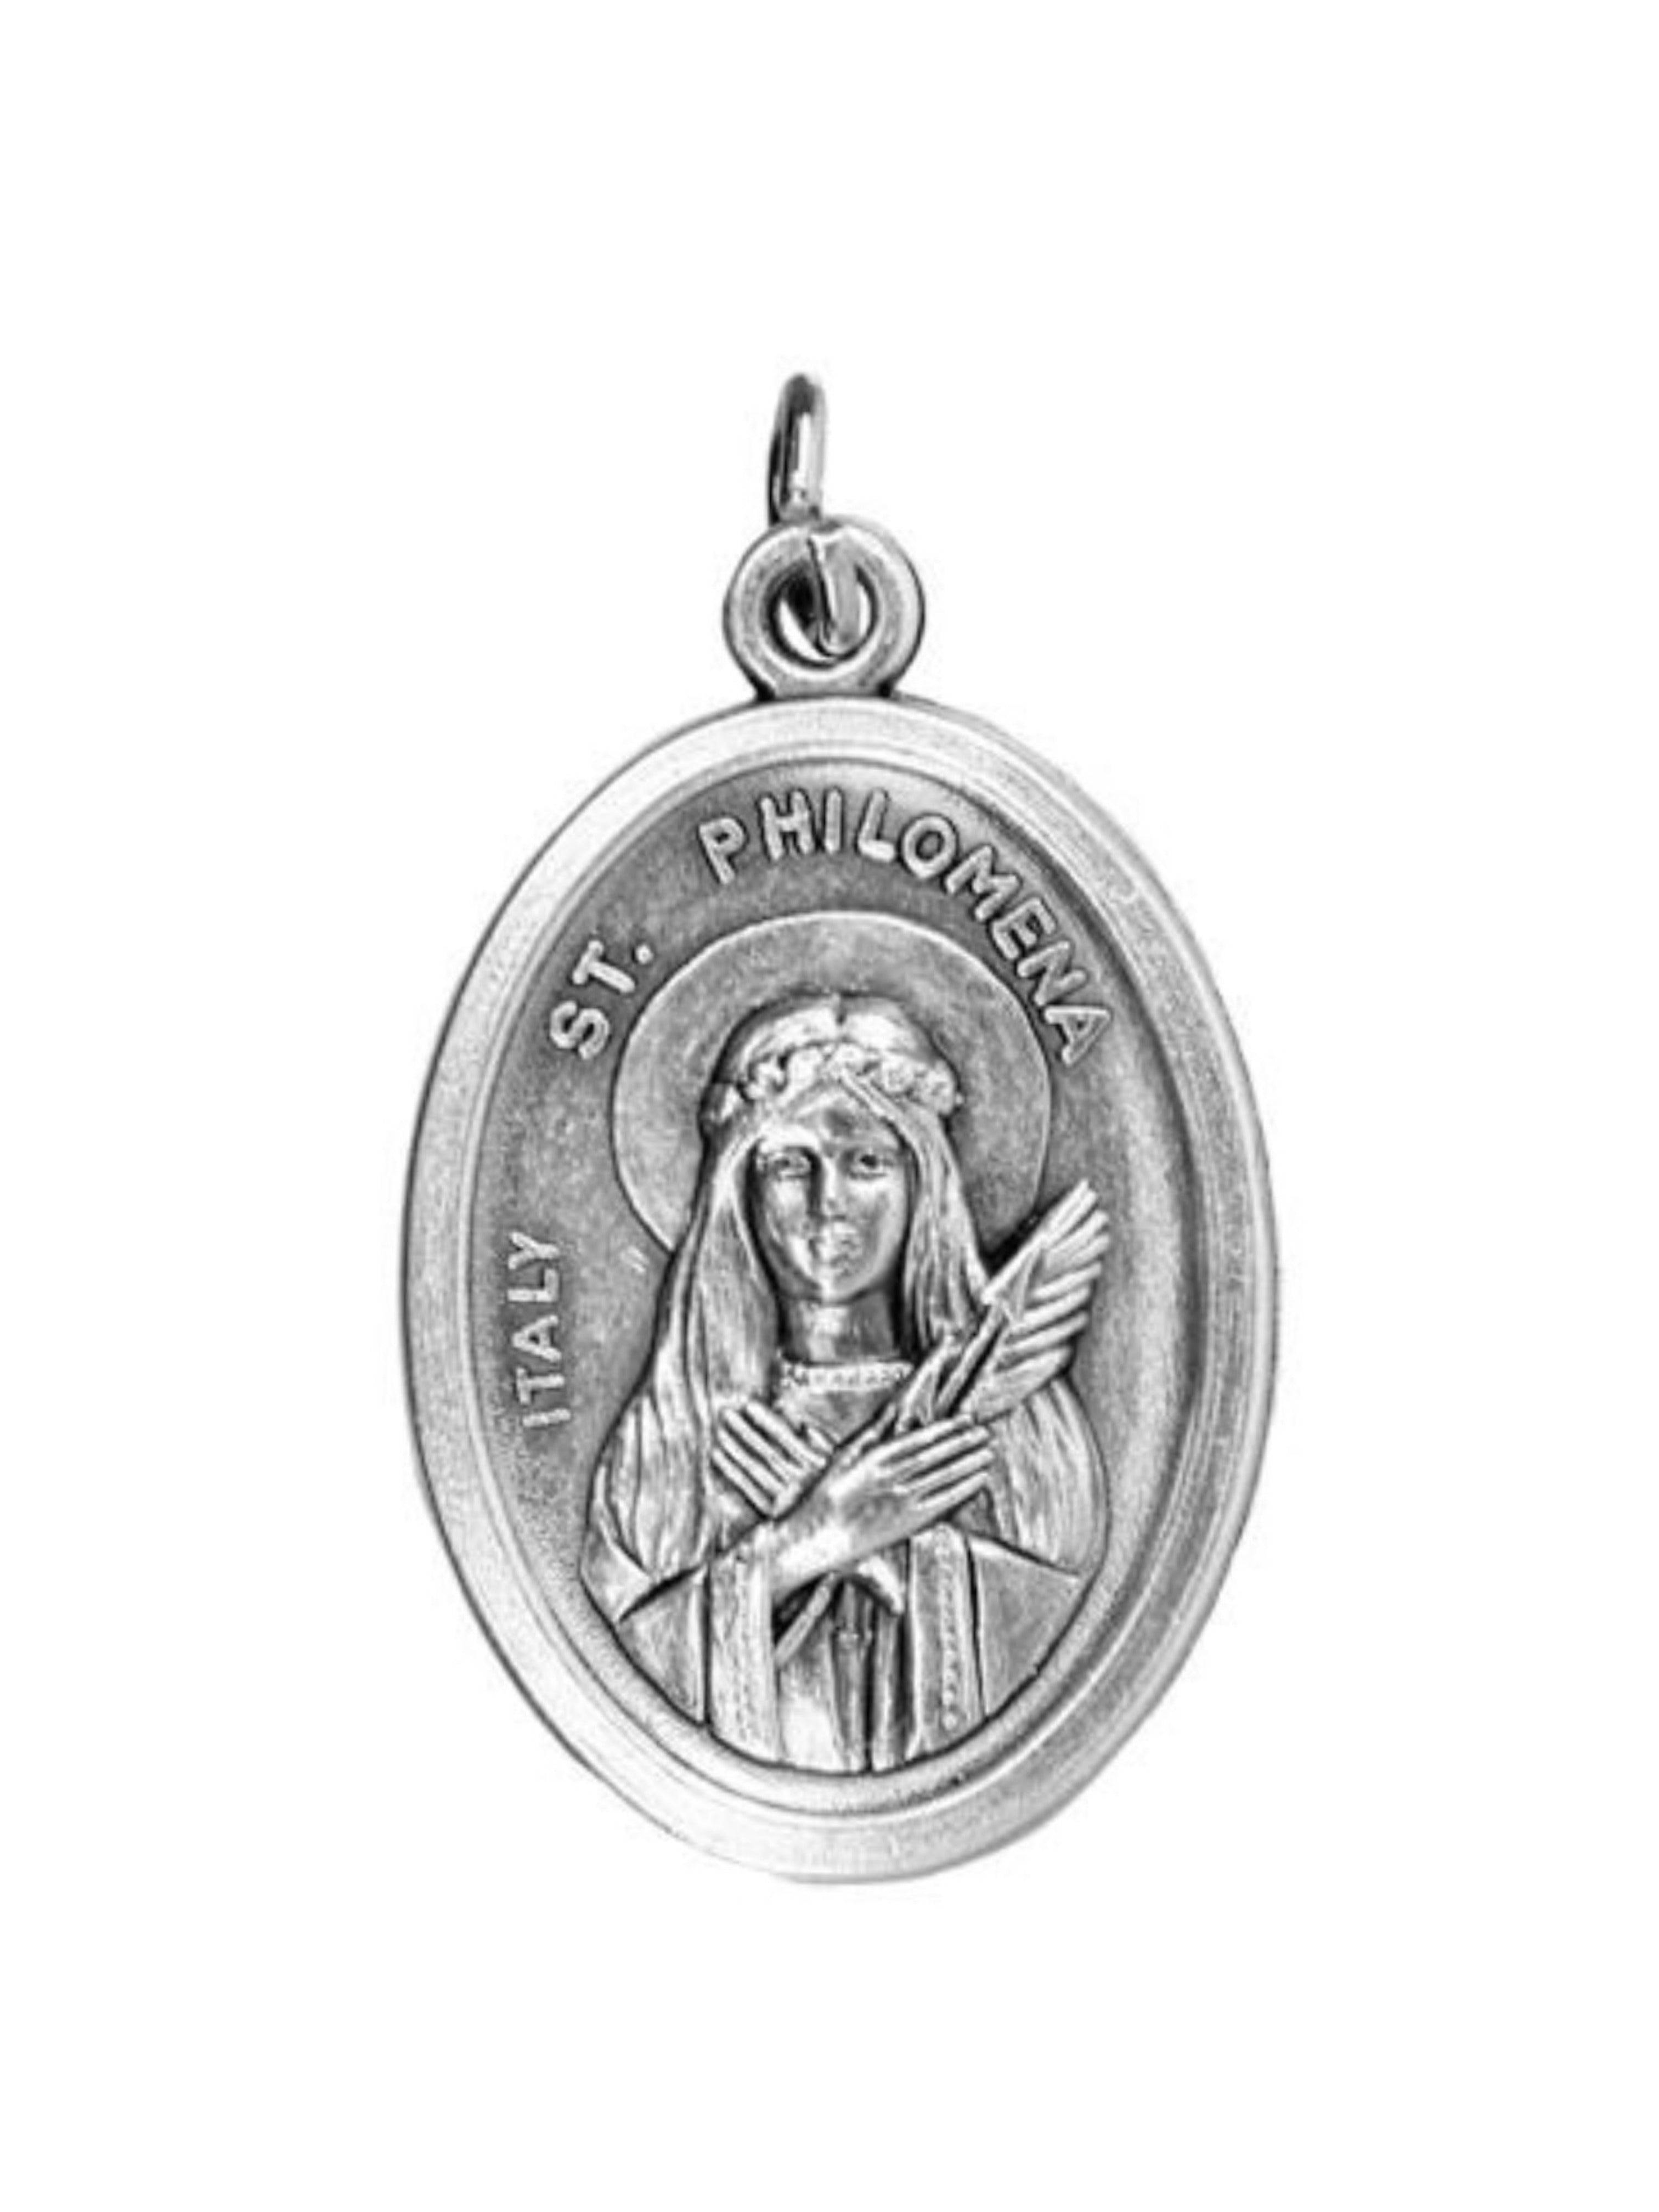 Saint Philomena Medal